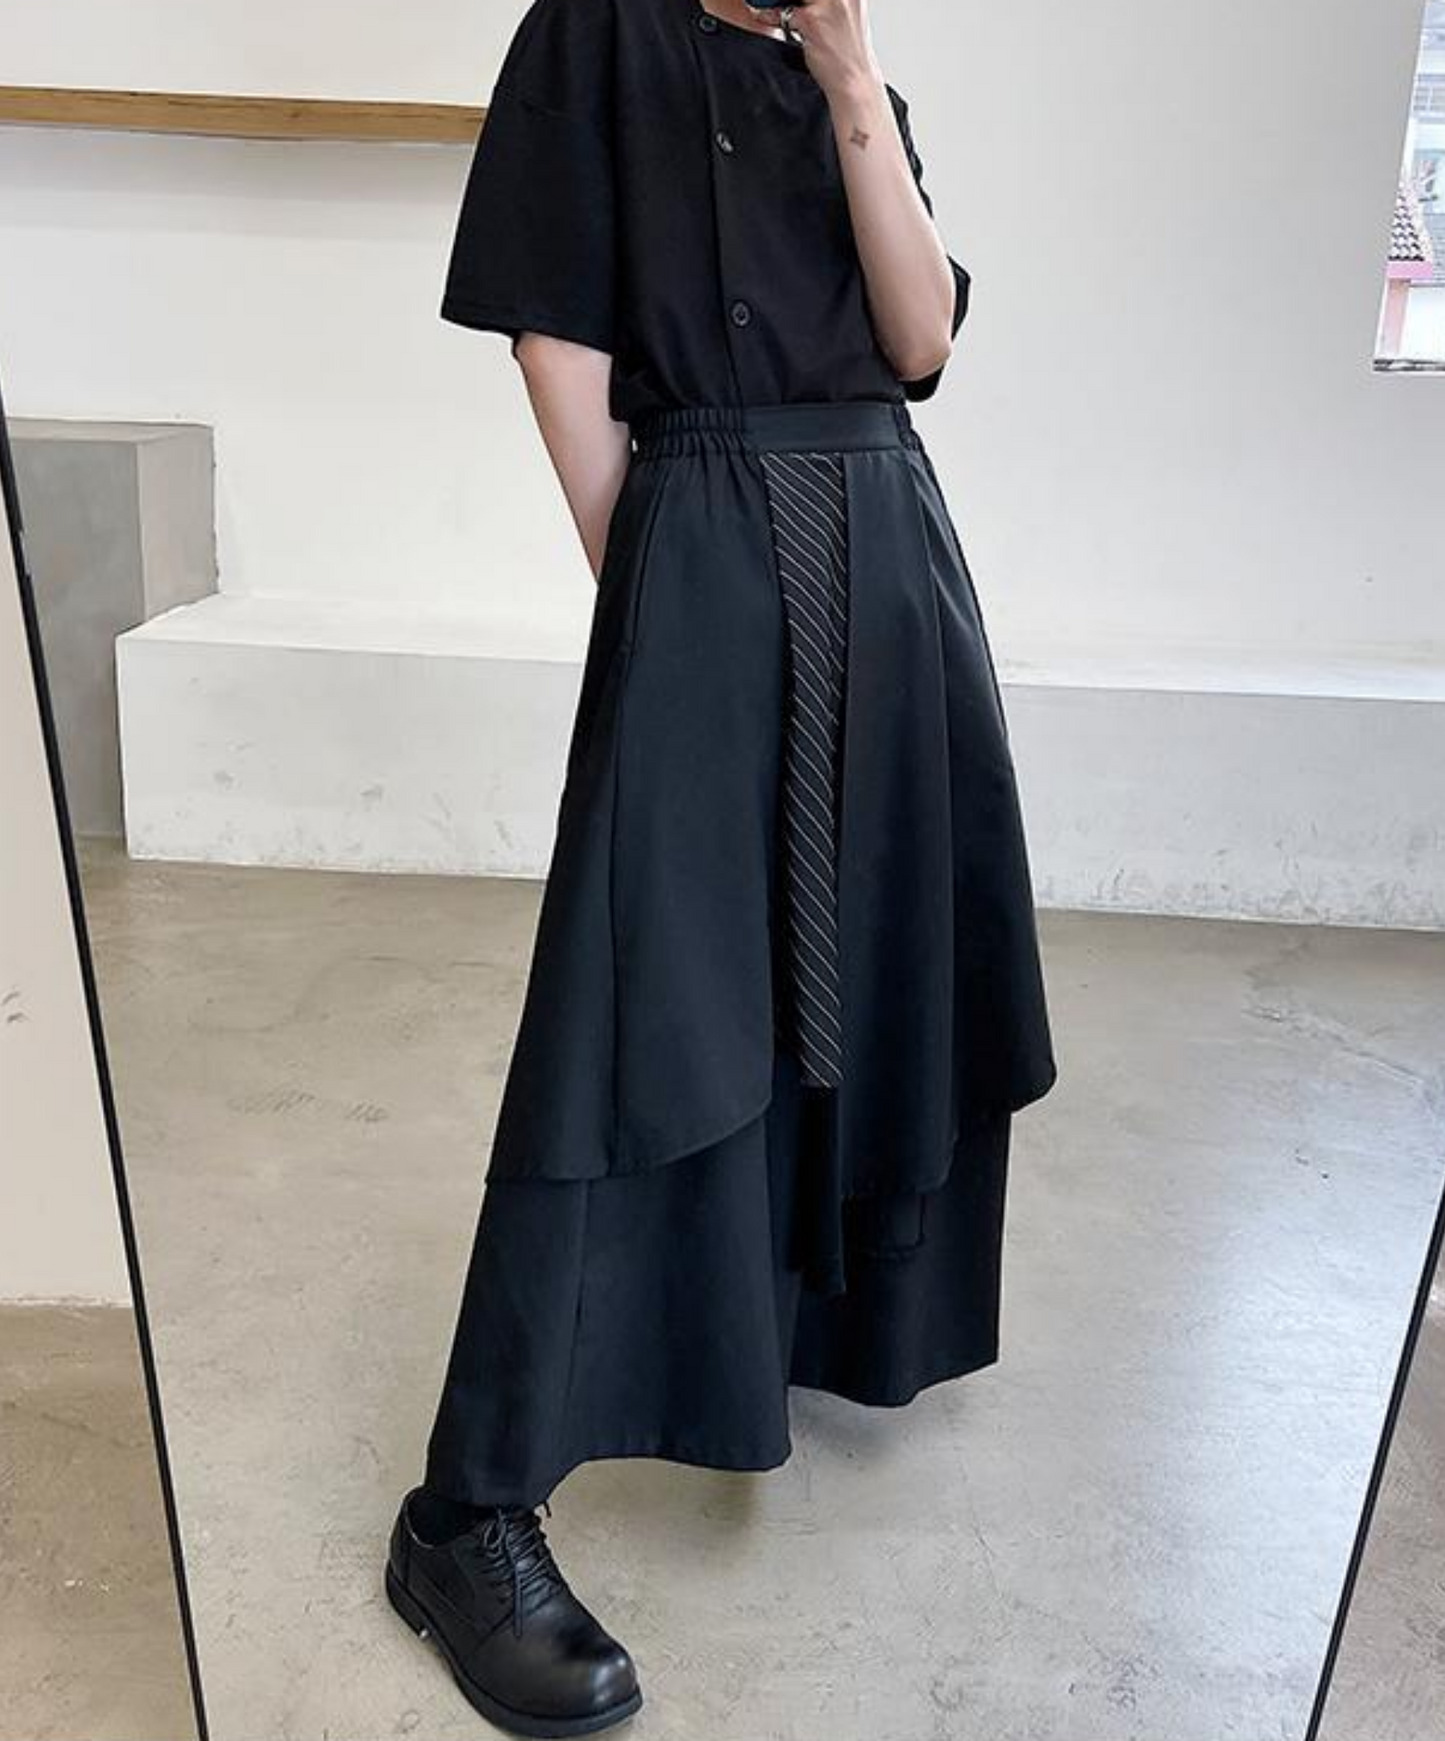 【style7】dark mode outfit set EN823（t-shirt + pants set）